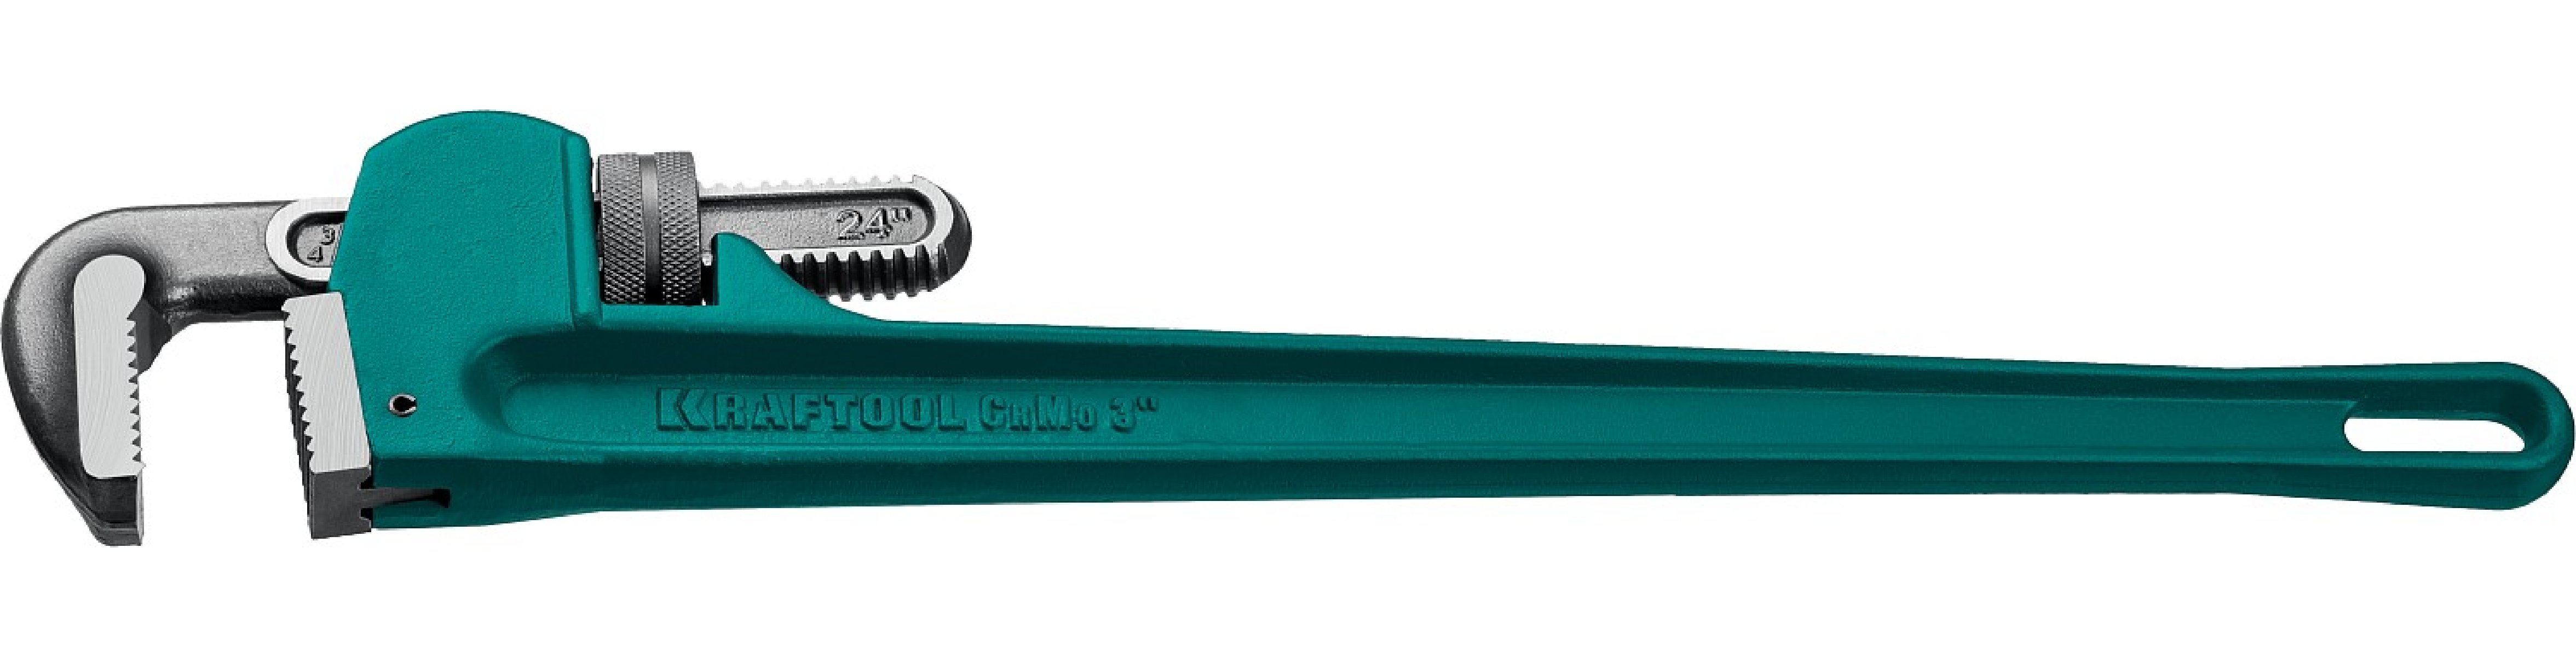 Трубный разводной ключ KRAFTOOL STILLSON 3 600 мм (2727-60)